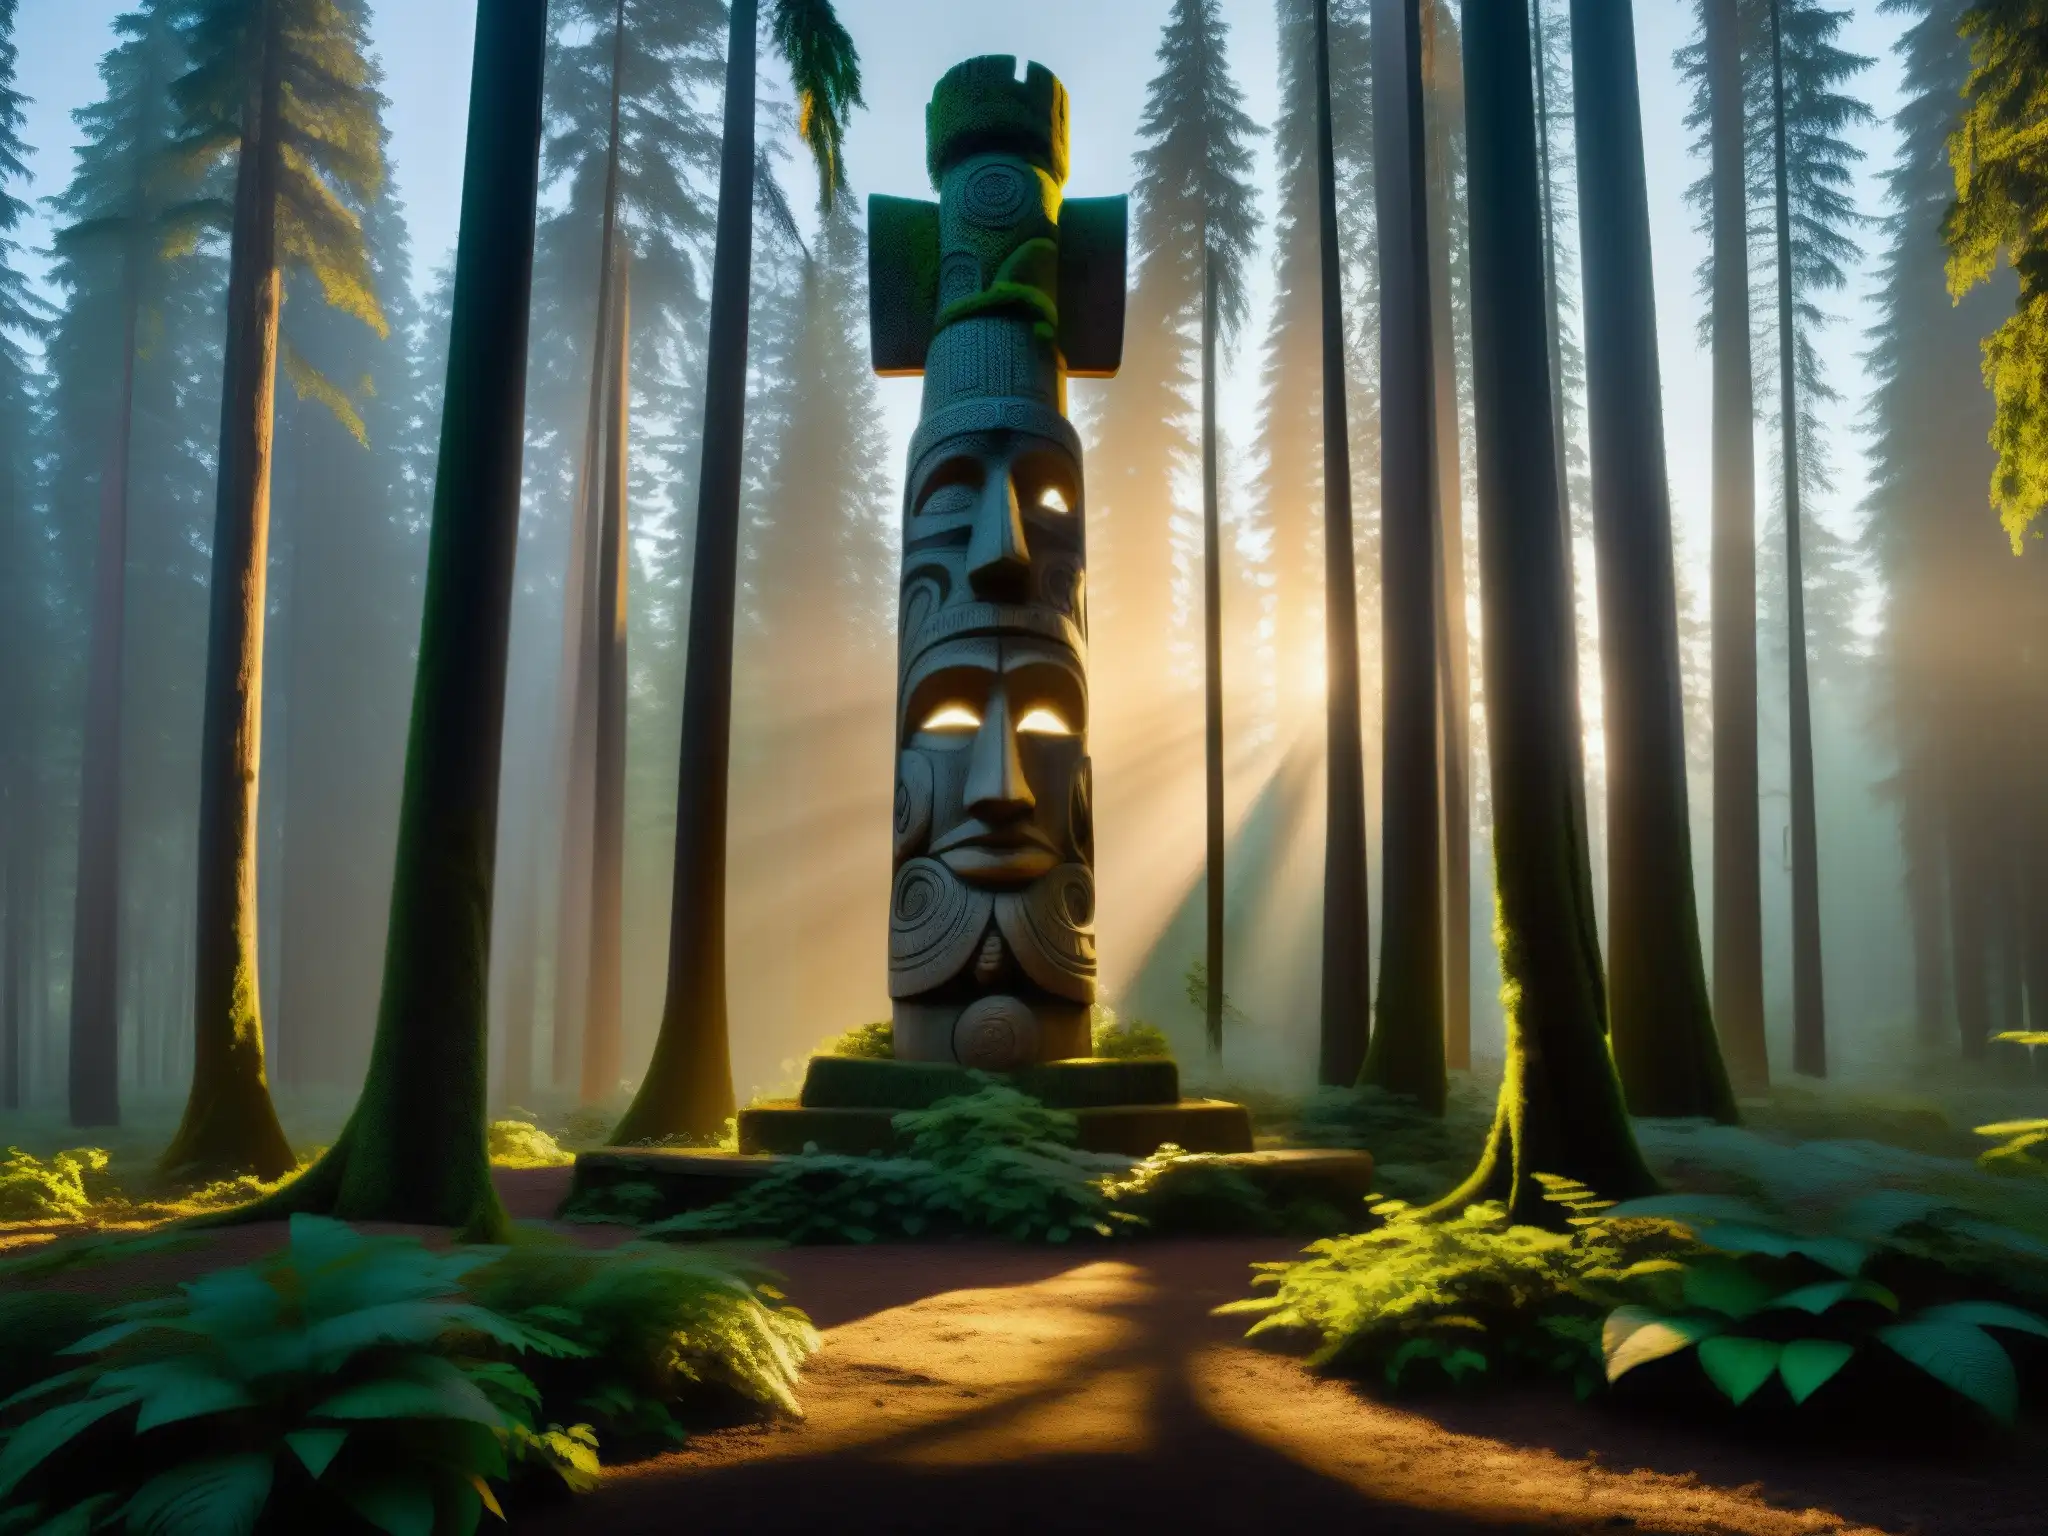 Un bosque misterioso al atardecer con un totem antiguo entre enredaderas, evocando historias no contadas y leyendas urbanas